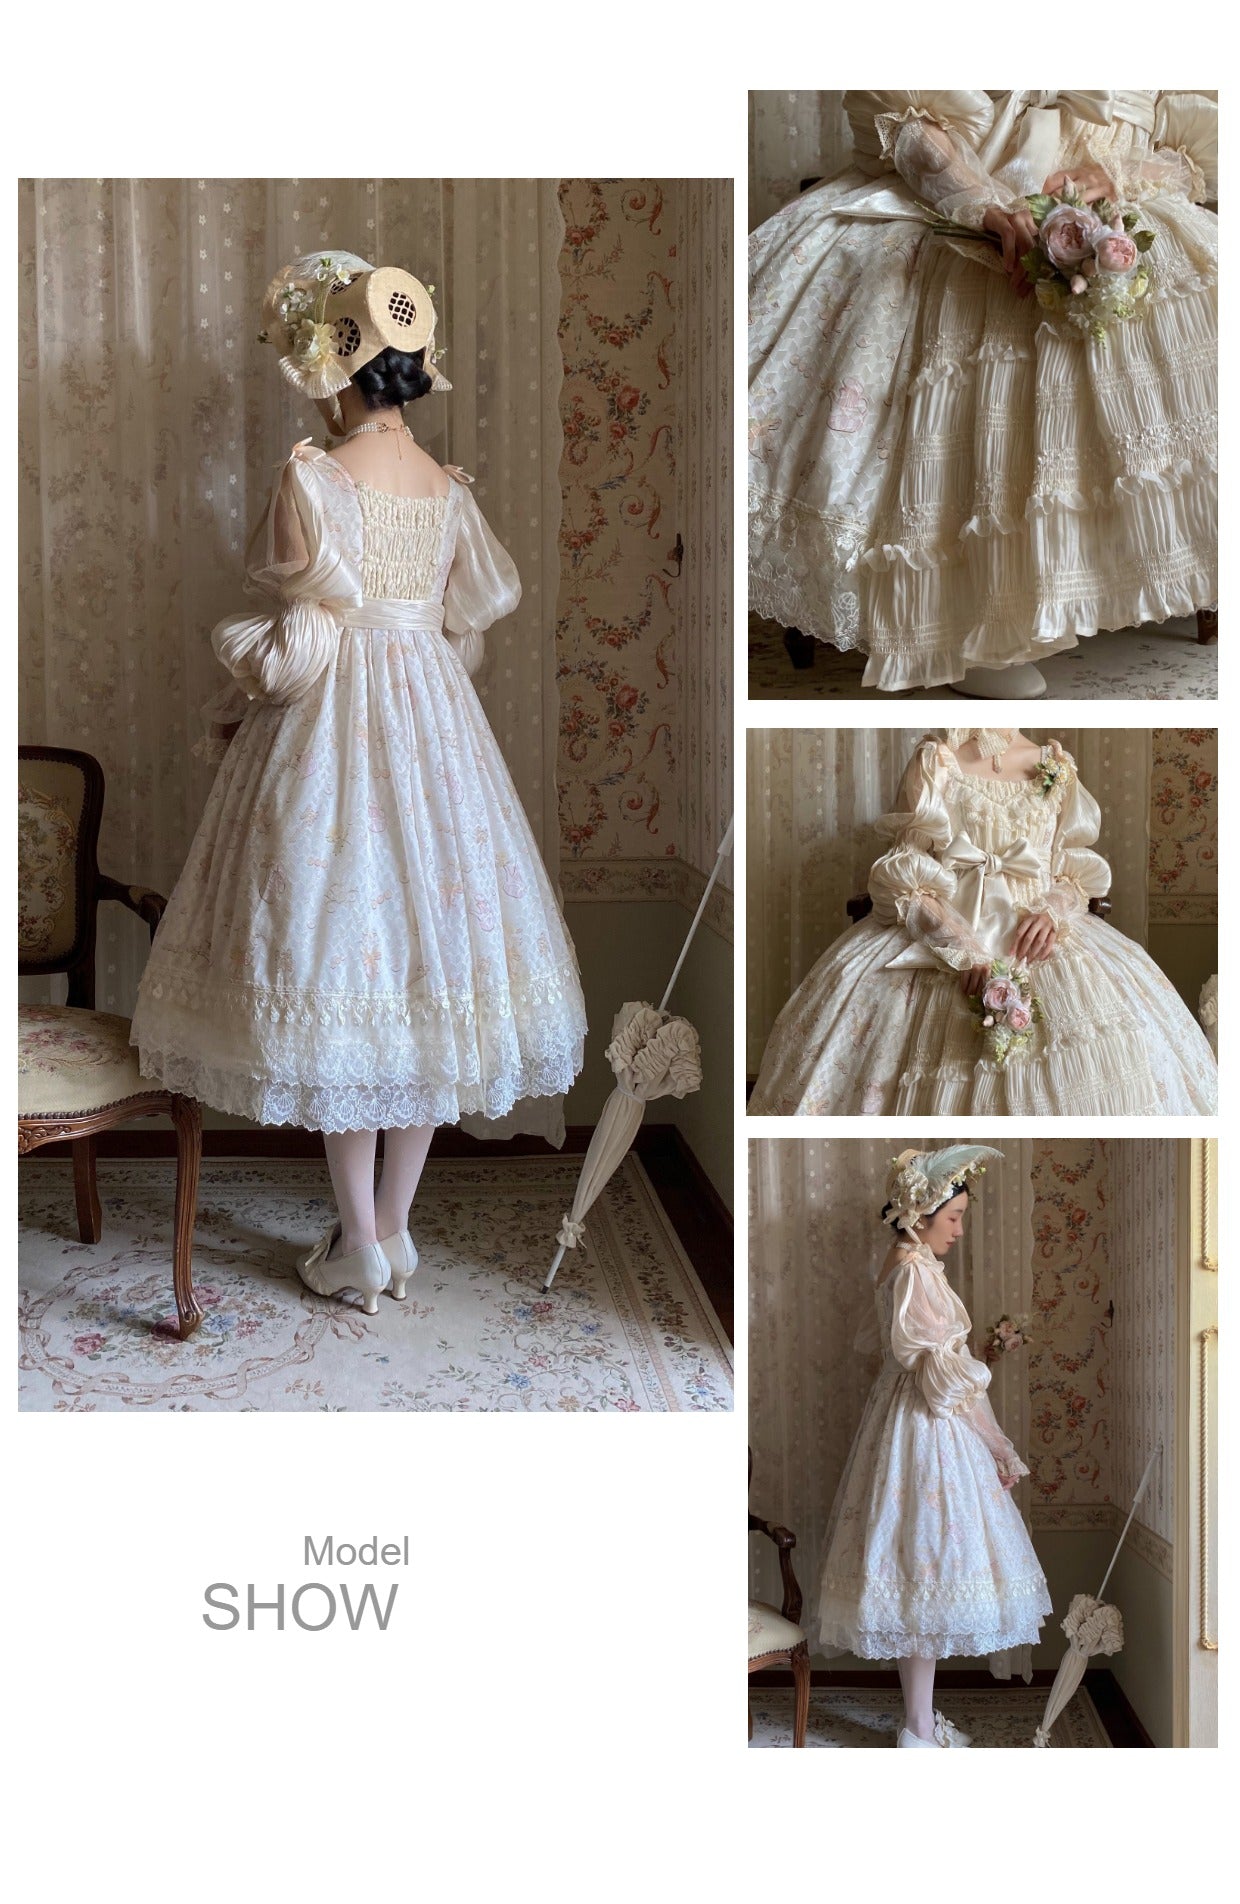 (Buyforme) Airfreeing~French Vintage Classic Lolita OP Jumper Dress   